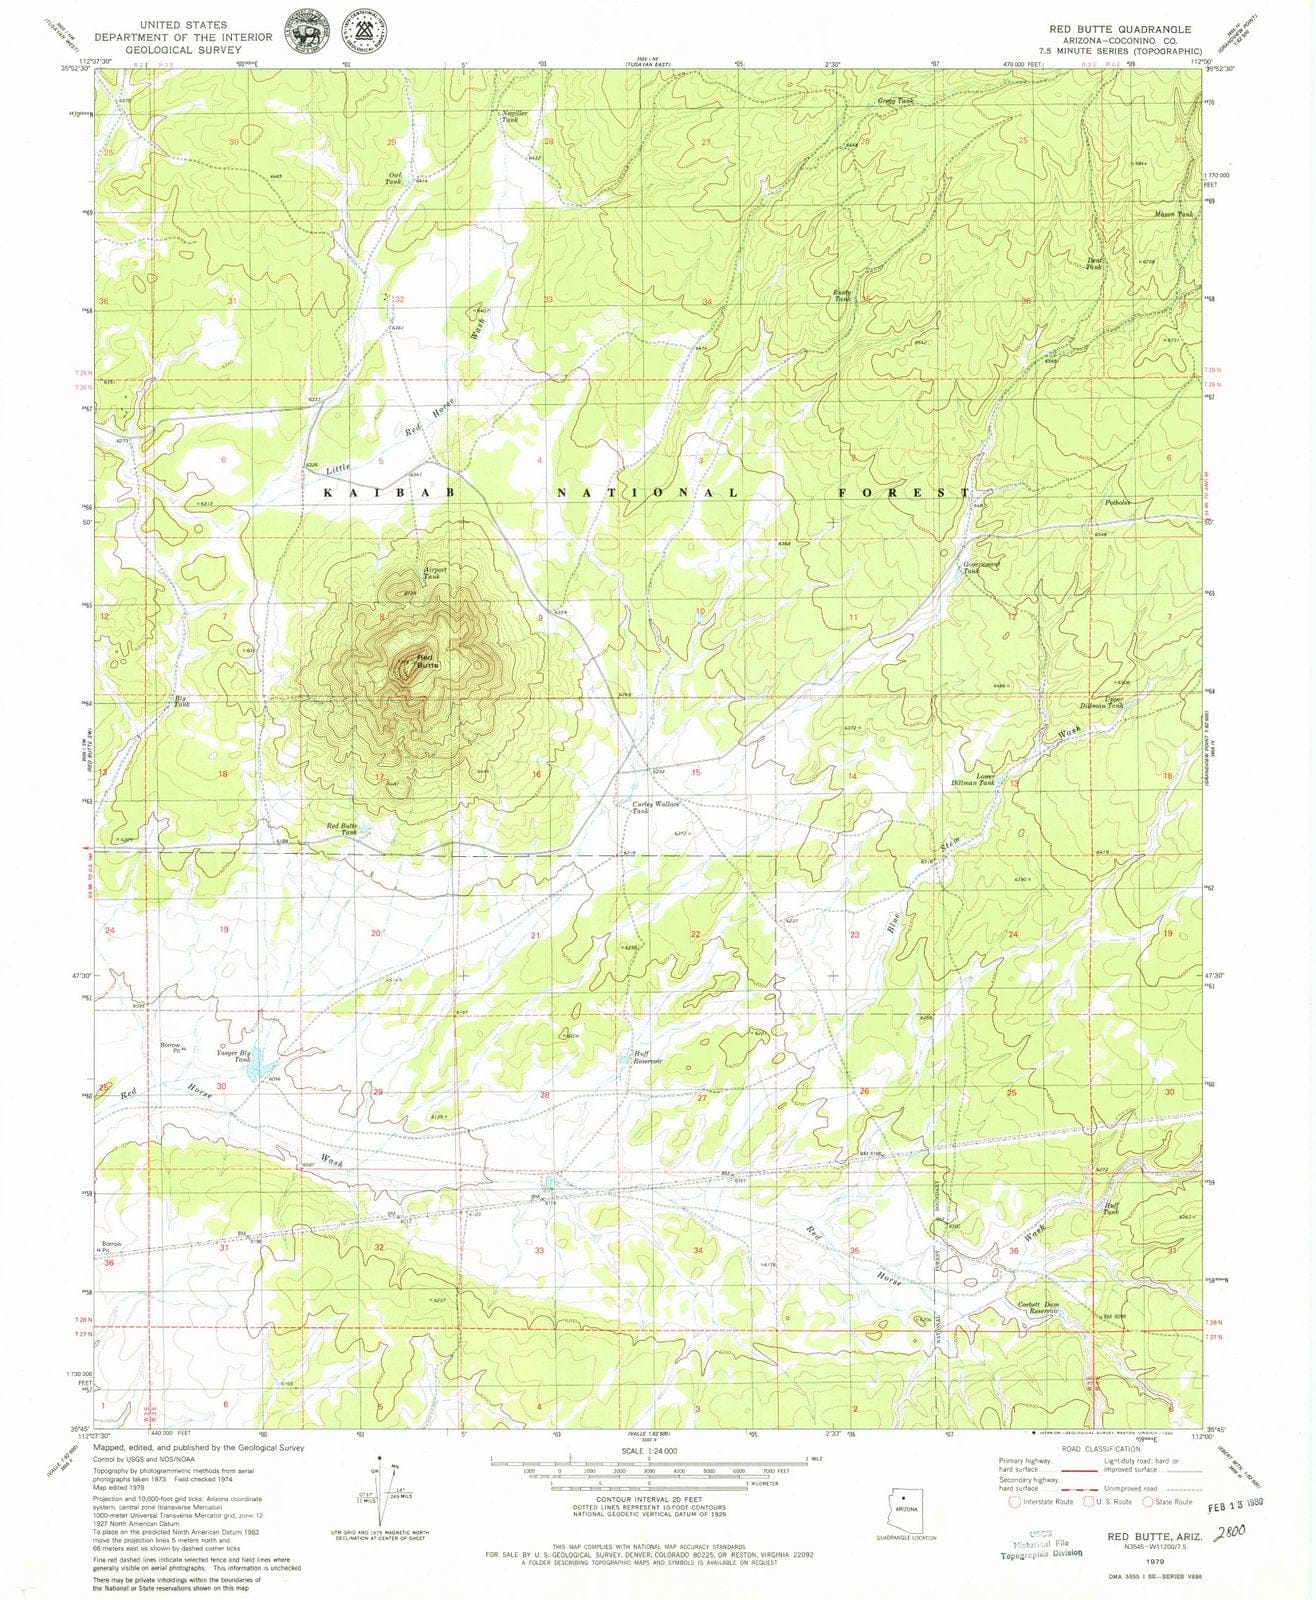 1979 Red Butte, AZ - Arizona - USGS Topographic Map